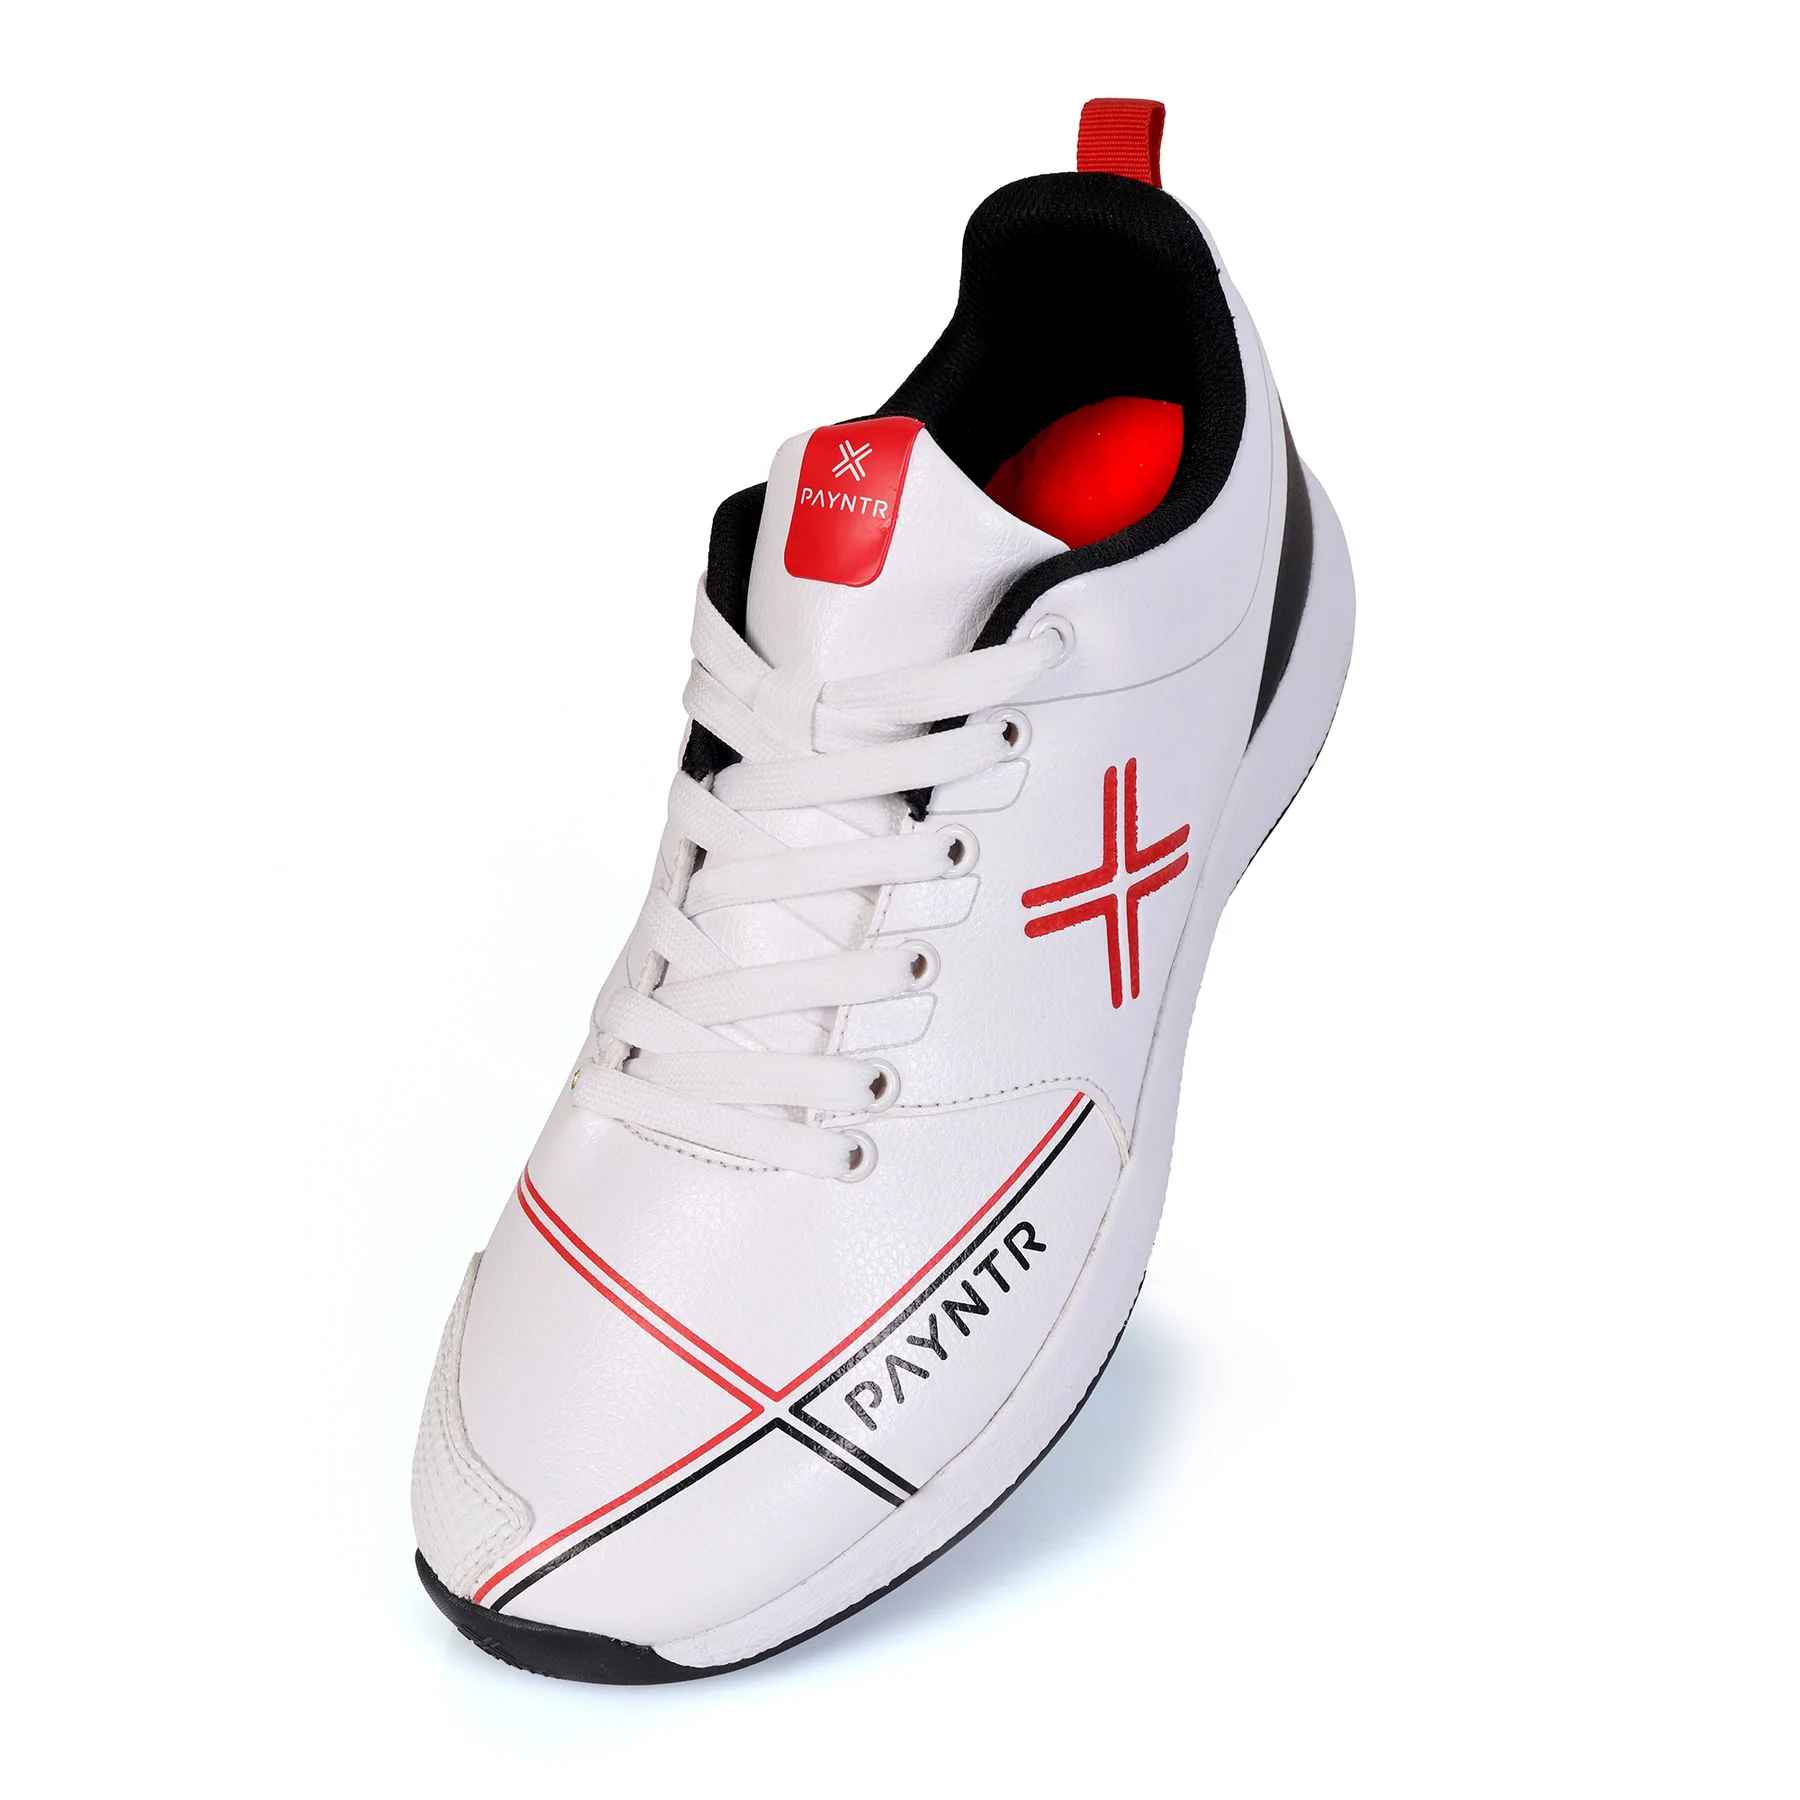 PAYNTR X SPIKES Cricket Shoes – White/Orange/Black